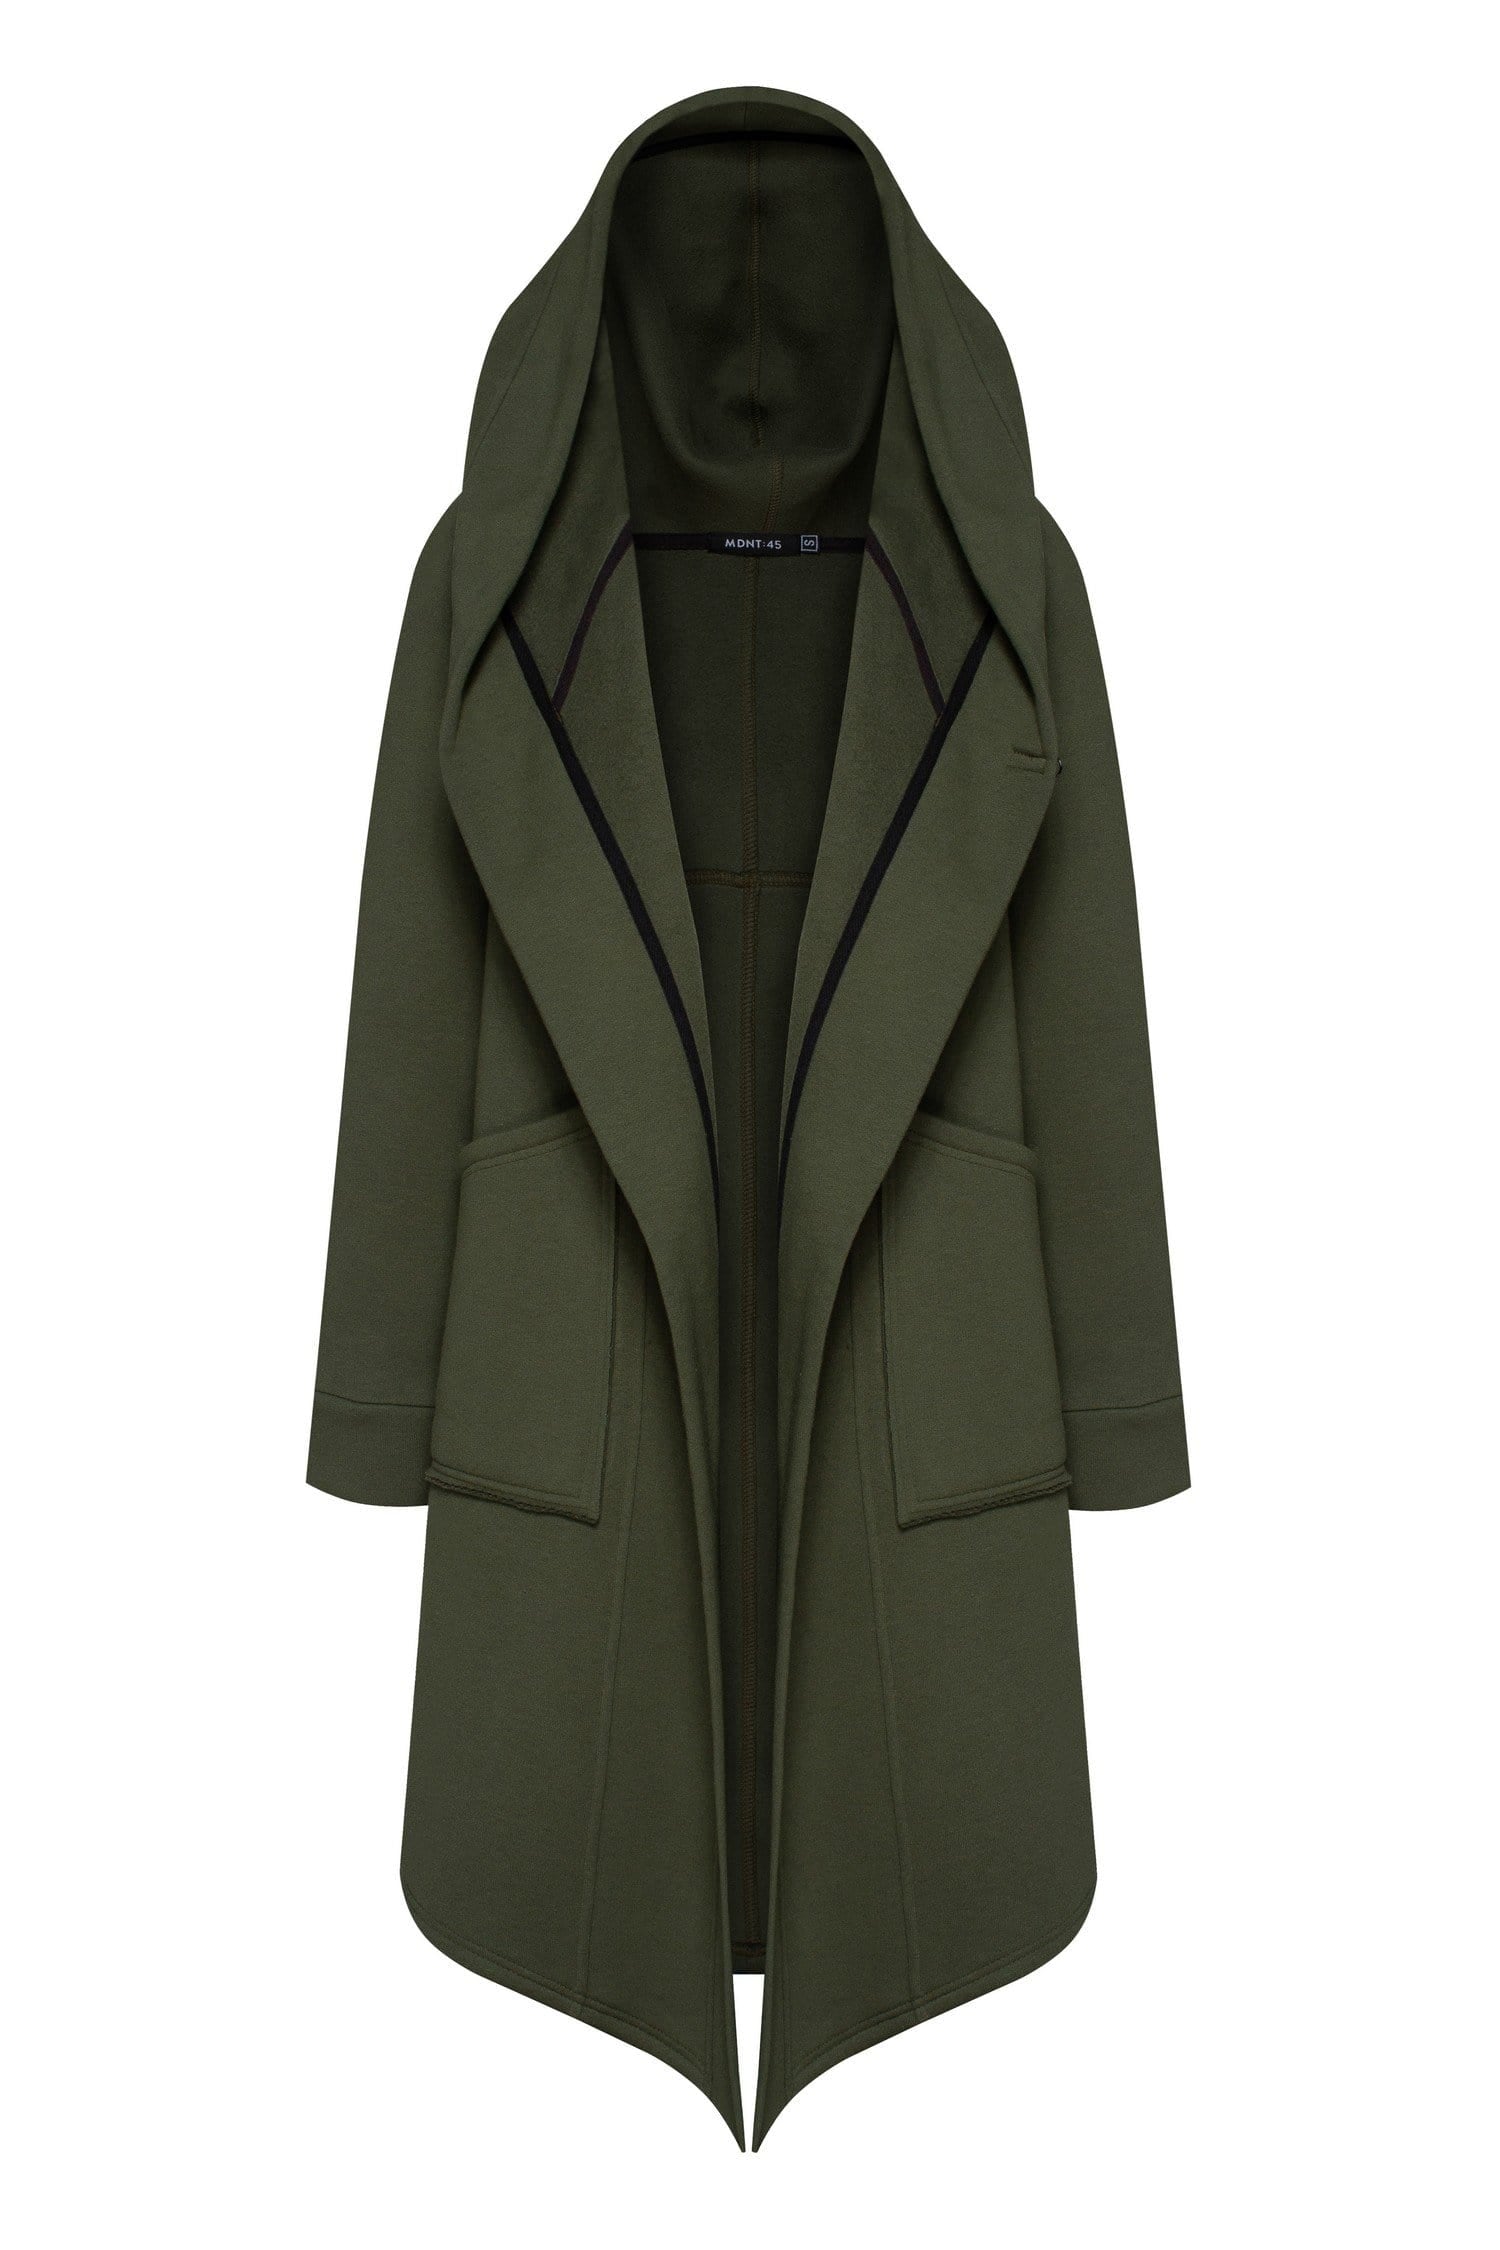 MDNT45 Coats & Jackets for Woman Khaki Hooded Jacket